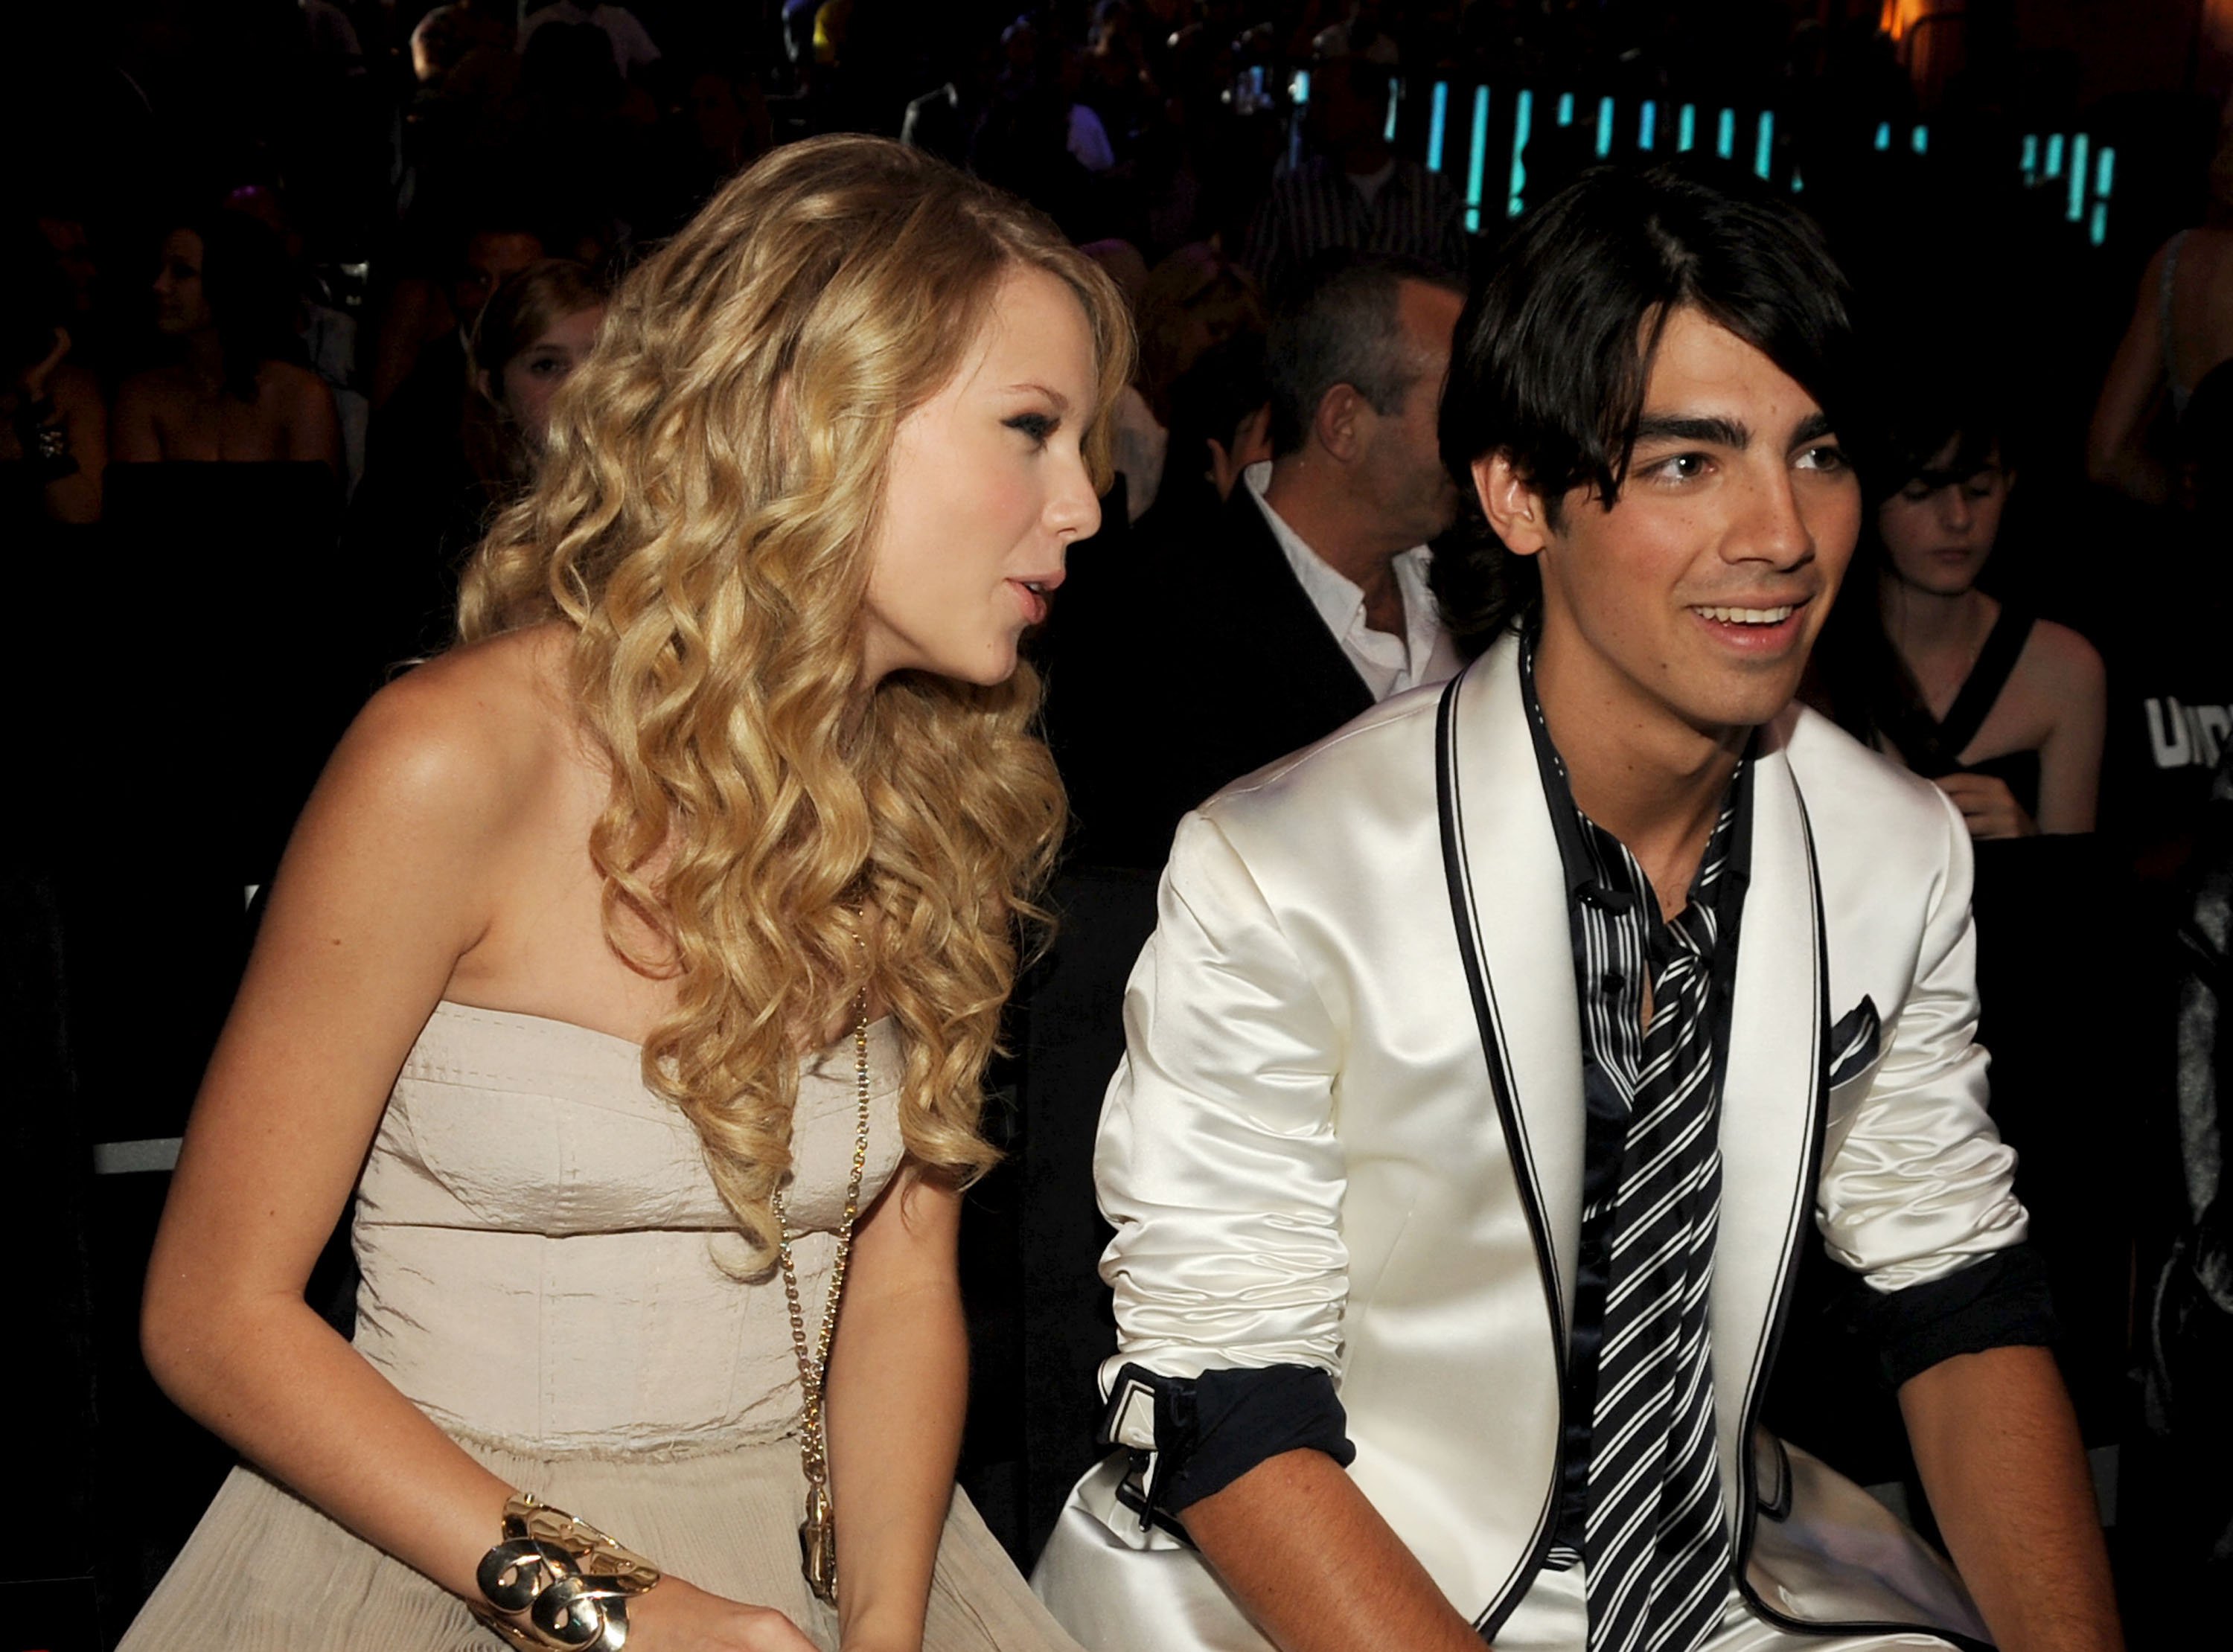 Singers Taylor Swift and Joe Jonas at the 2008 MTV Video Music Awards